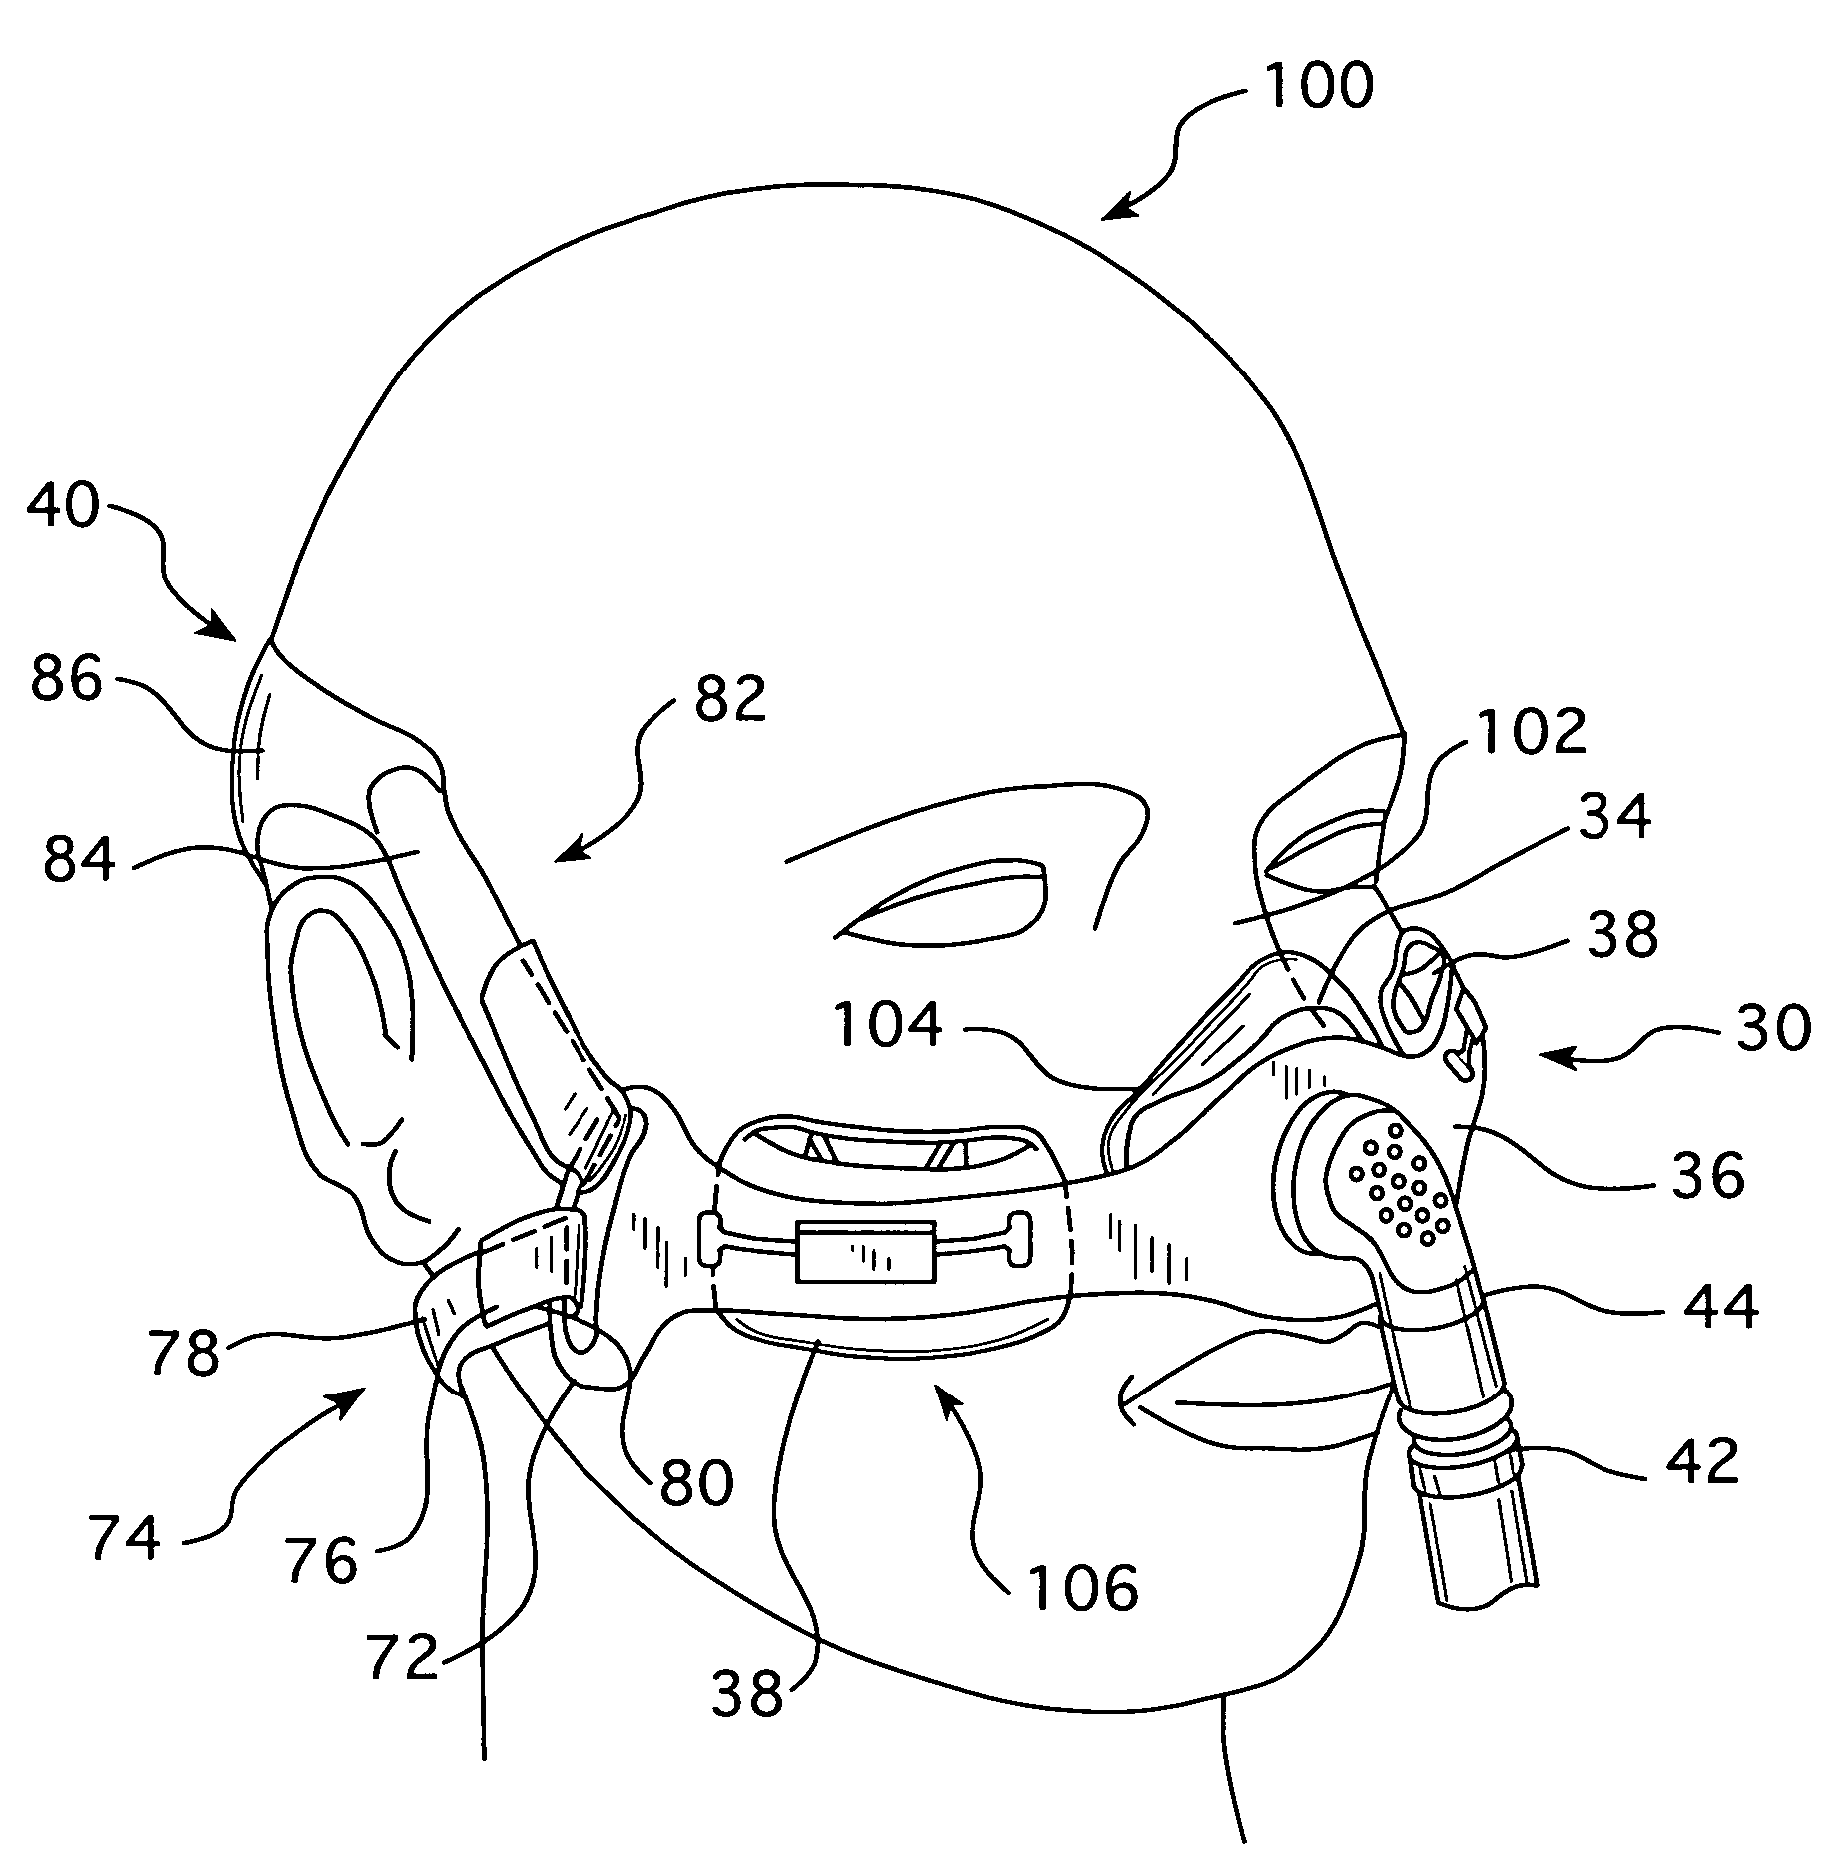 Cheek-mounted patient interface